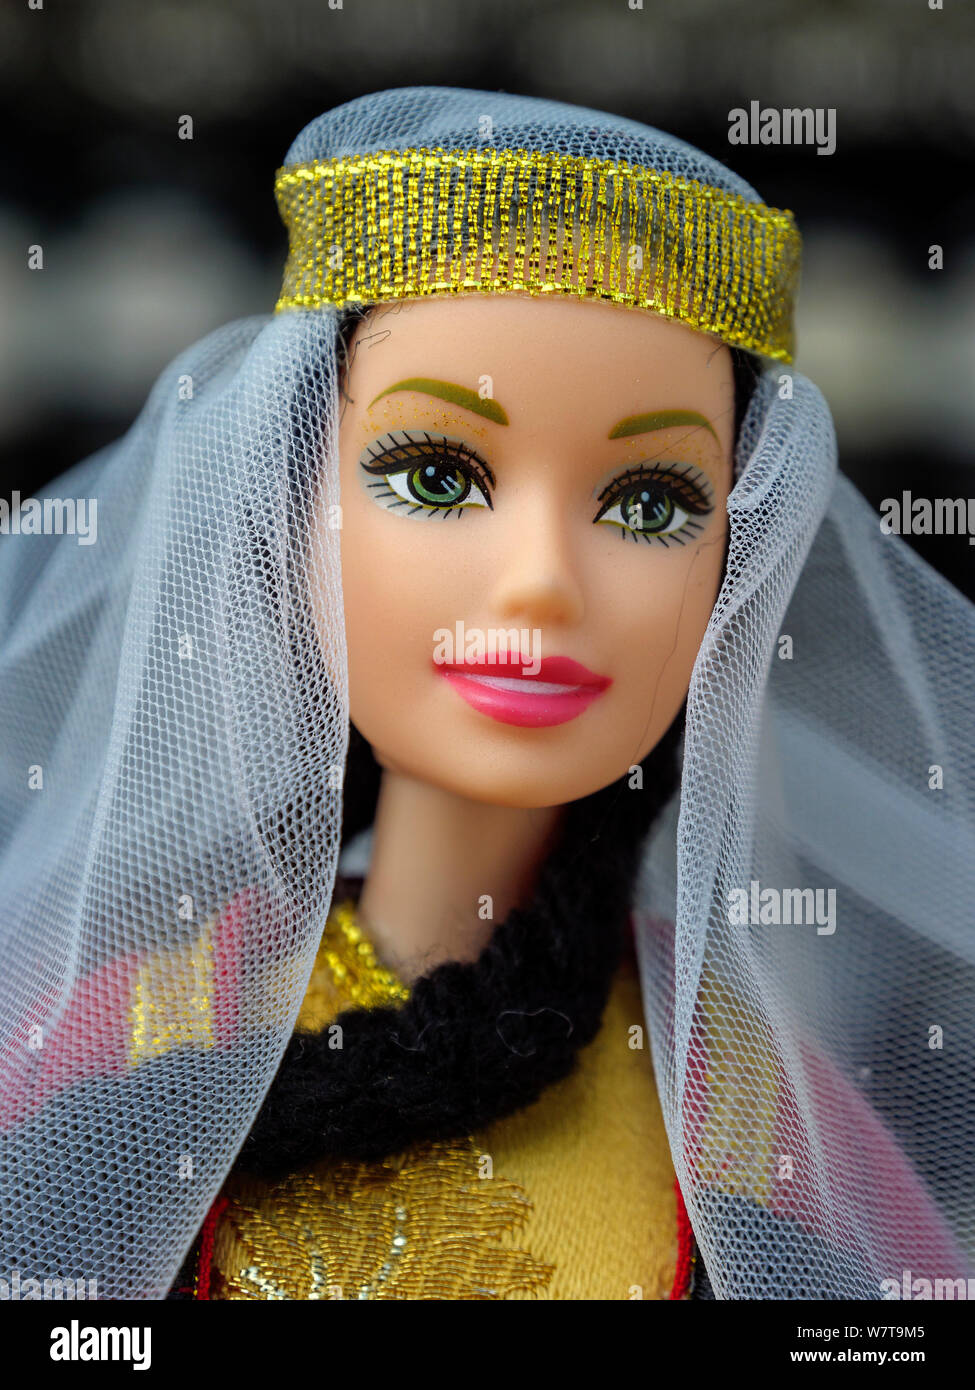 En traditioneller Puppen Kleidung - Souvenir, Batumi, Adscharien - Atschara, Georgien, Europa muñecas en traje tradicional, Batumi, Adzharia, Georgia, EU Foto de stock